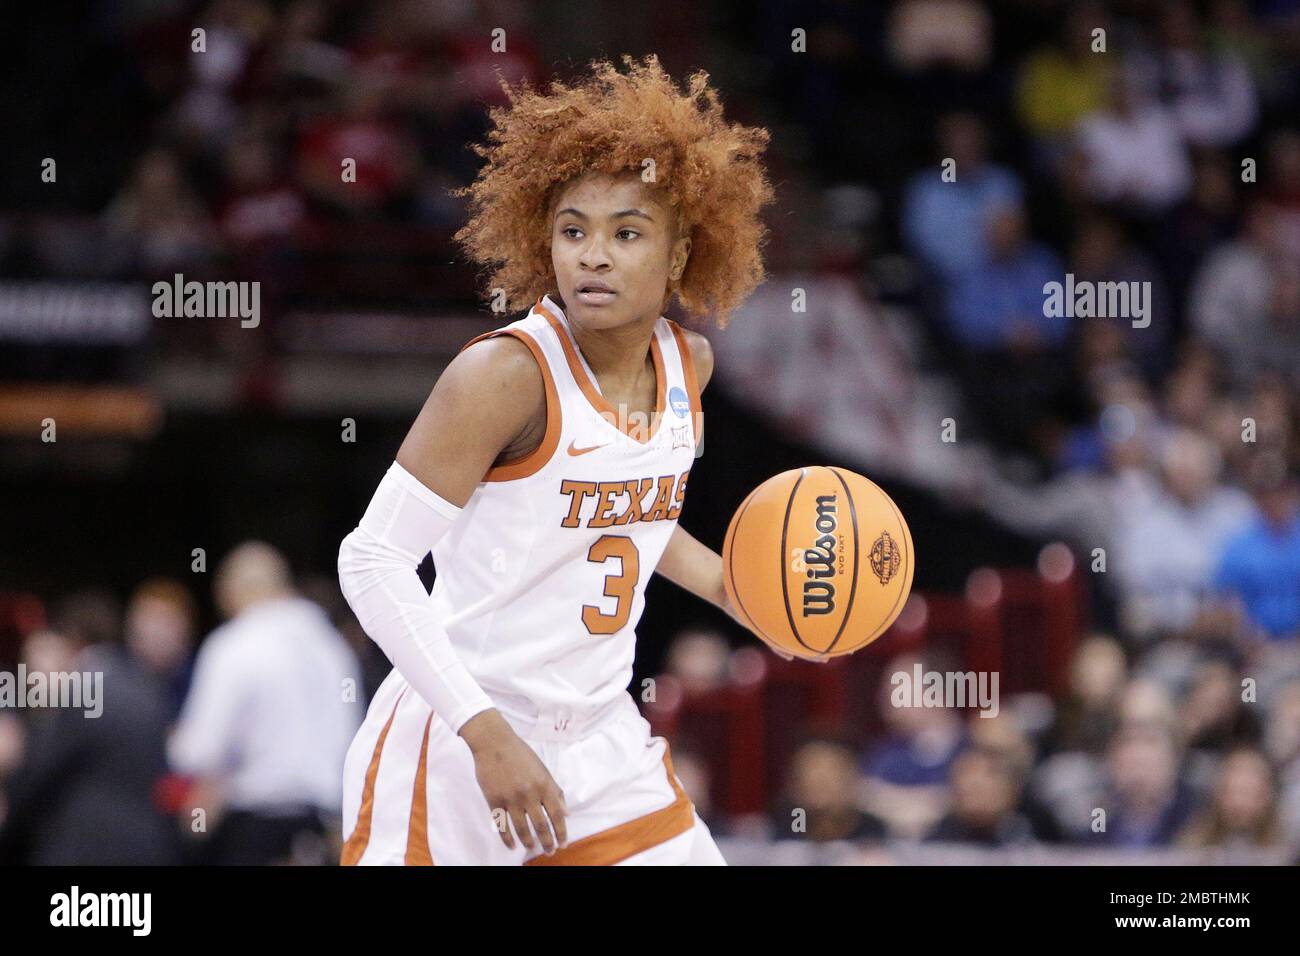 Texas guard Rori Harmon controls the ball during a college basketball ...